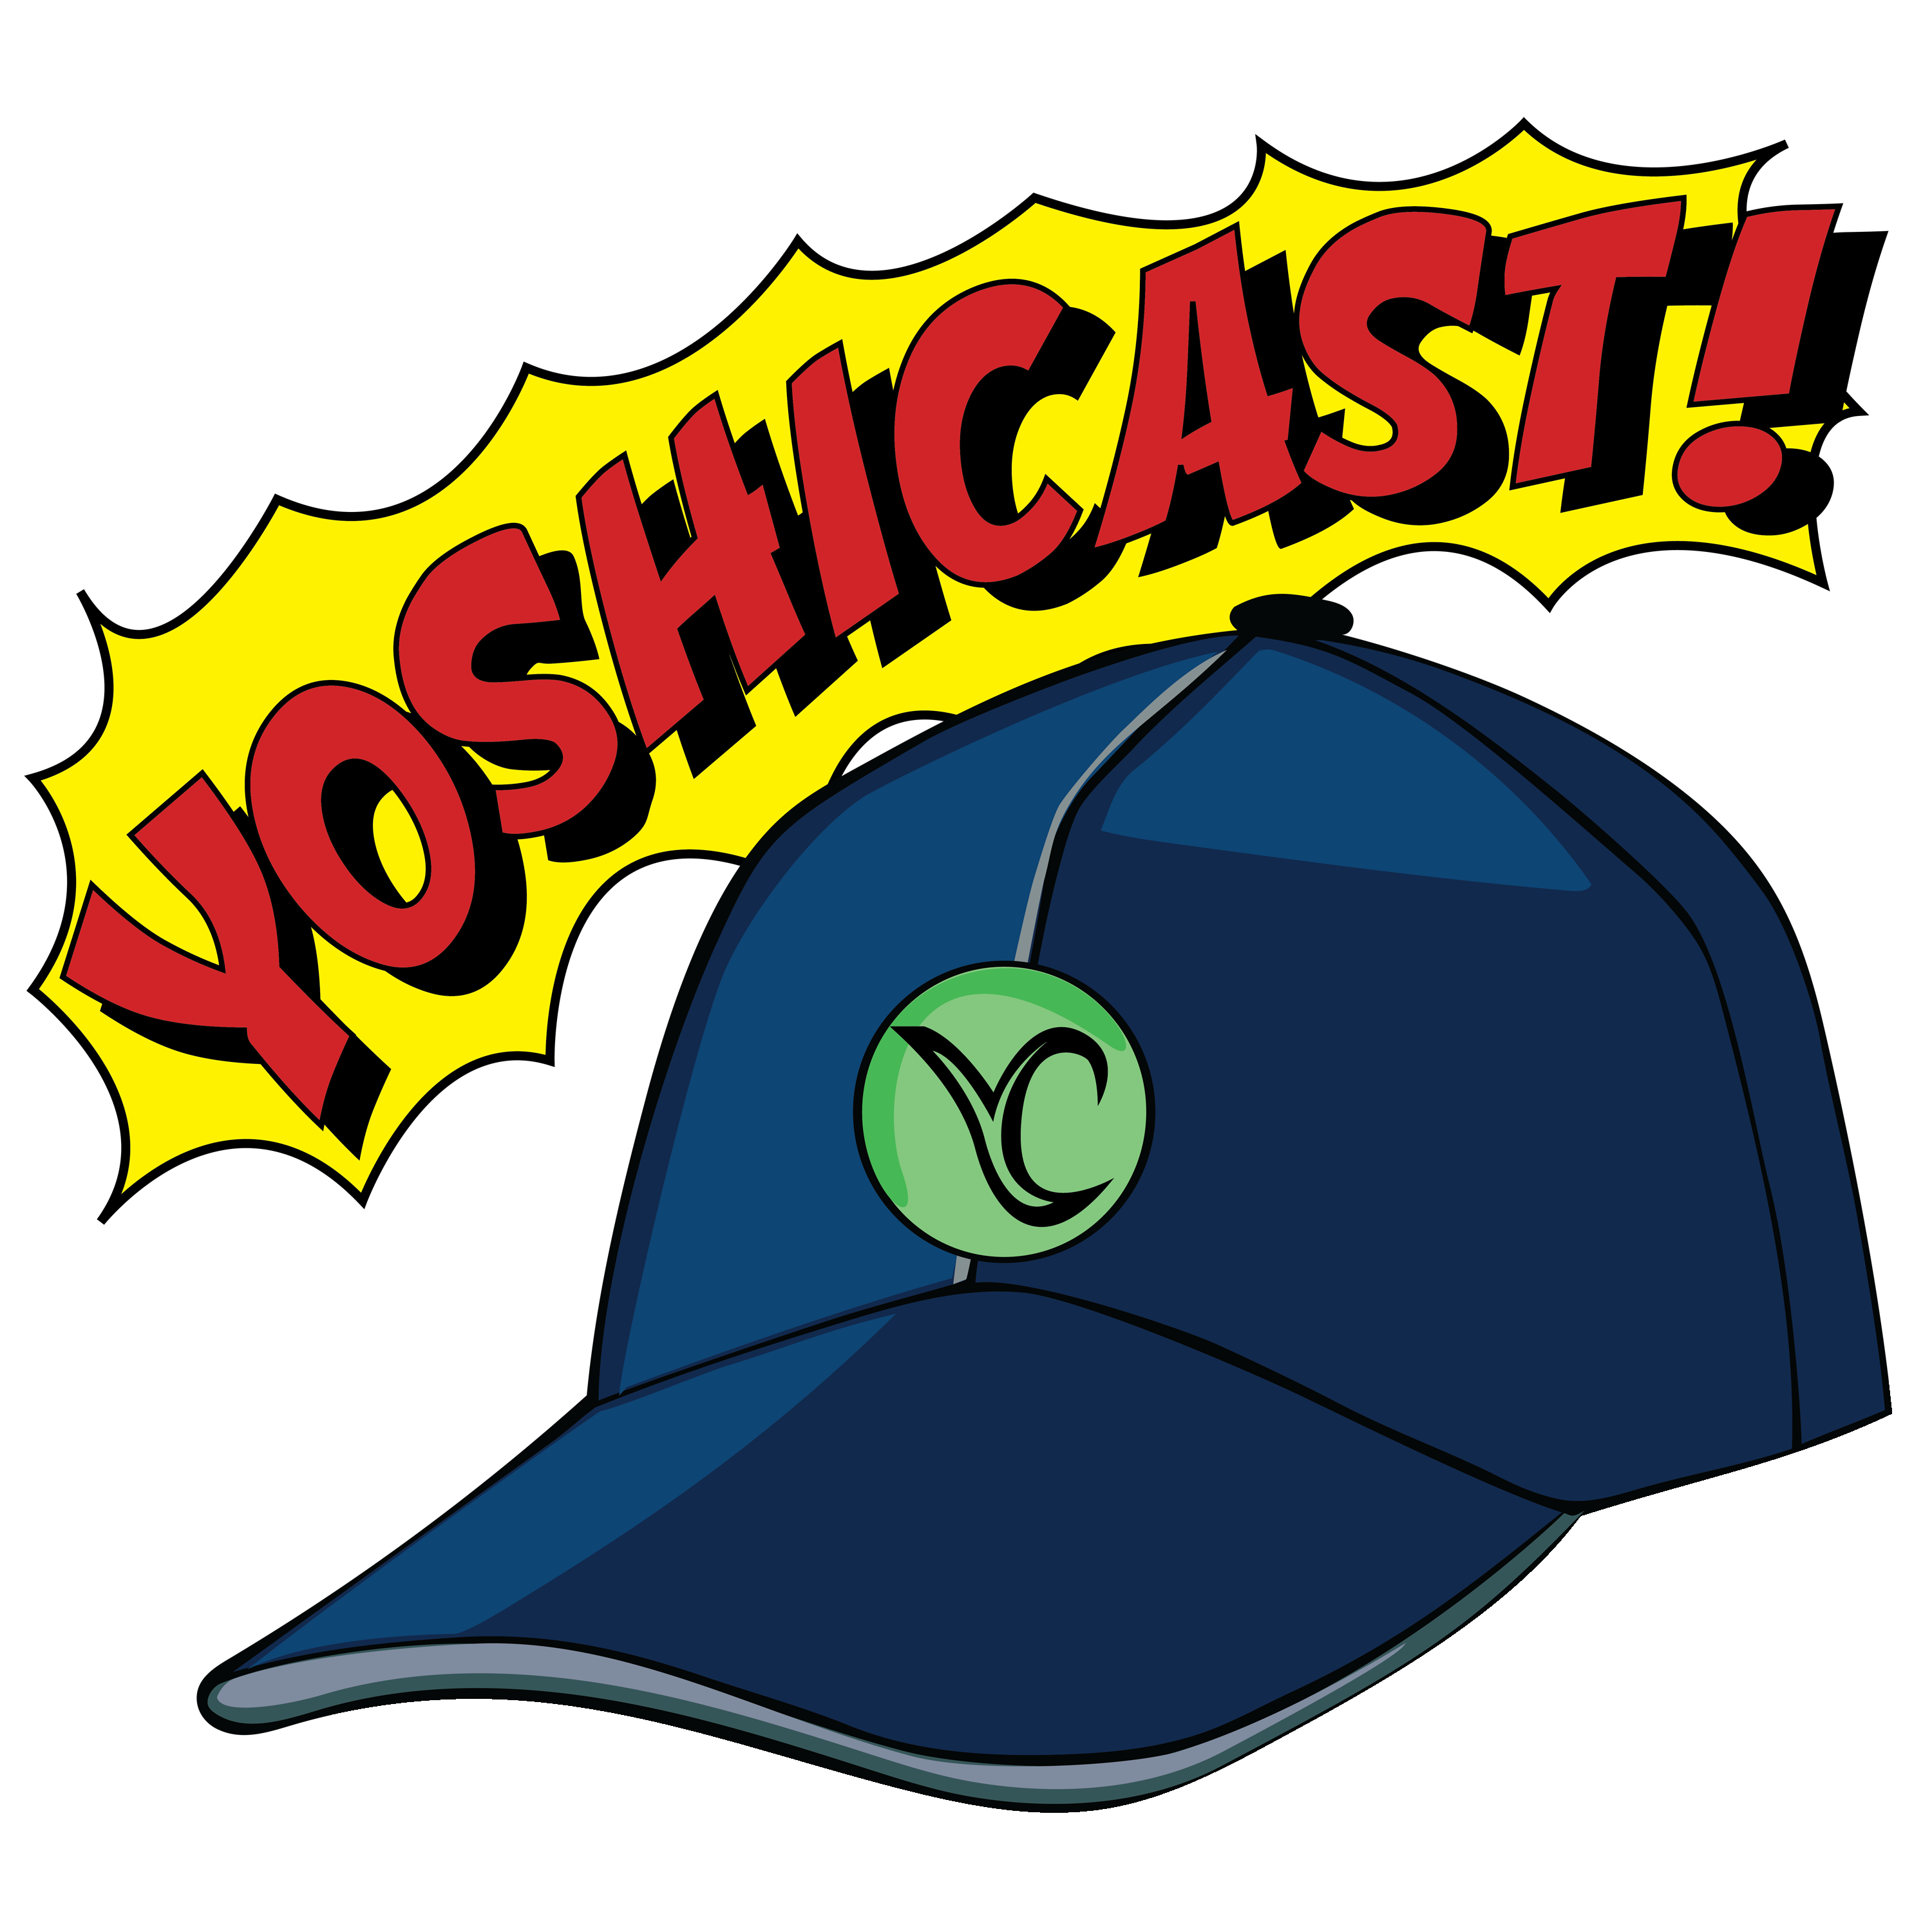 YoshiCast